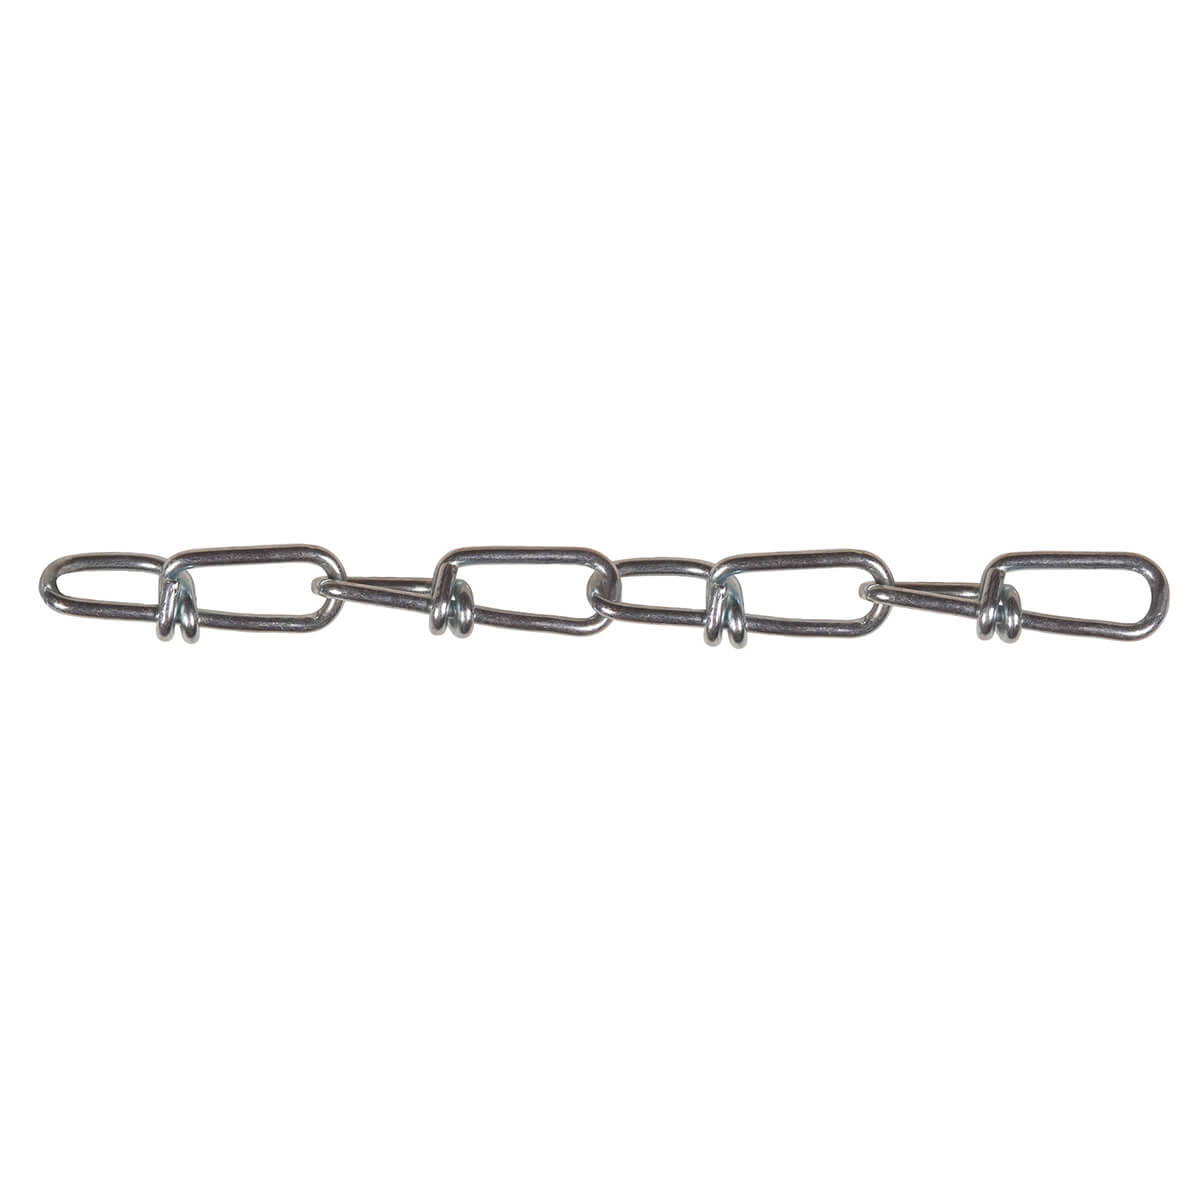 Double Loop Chain - Steel